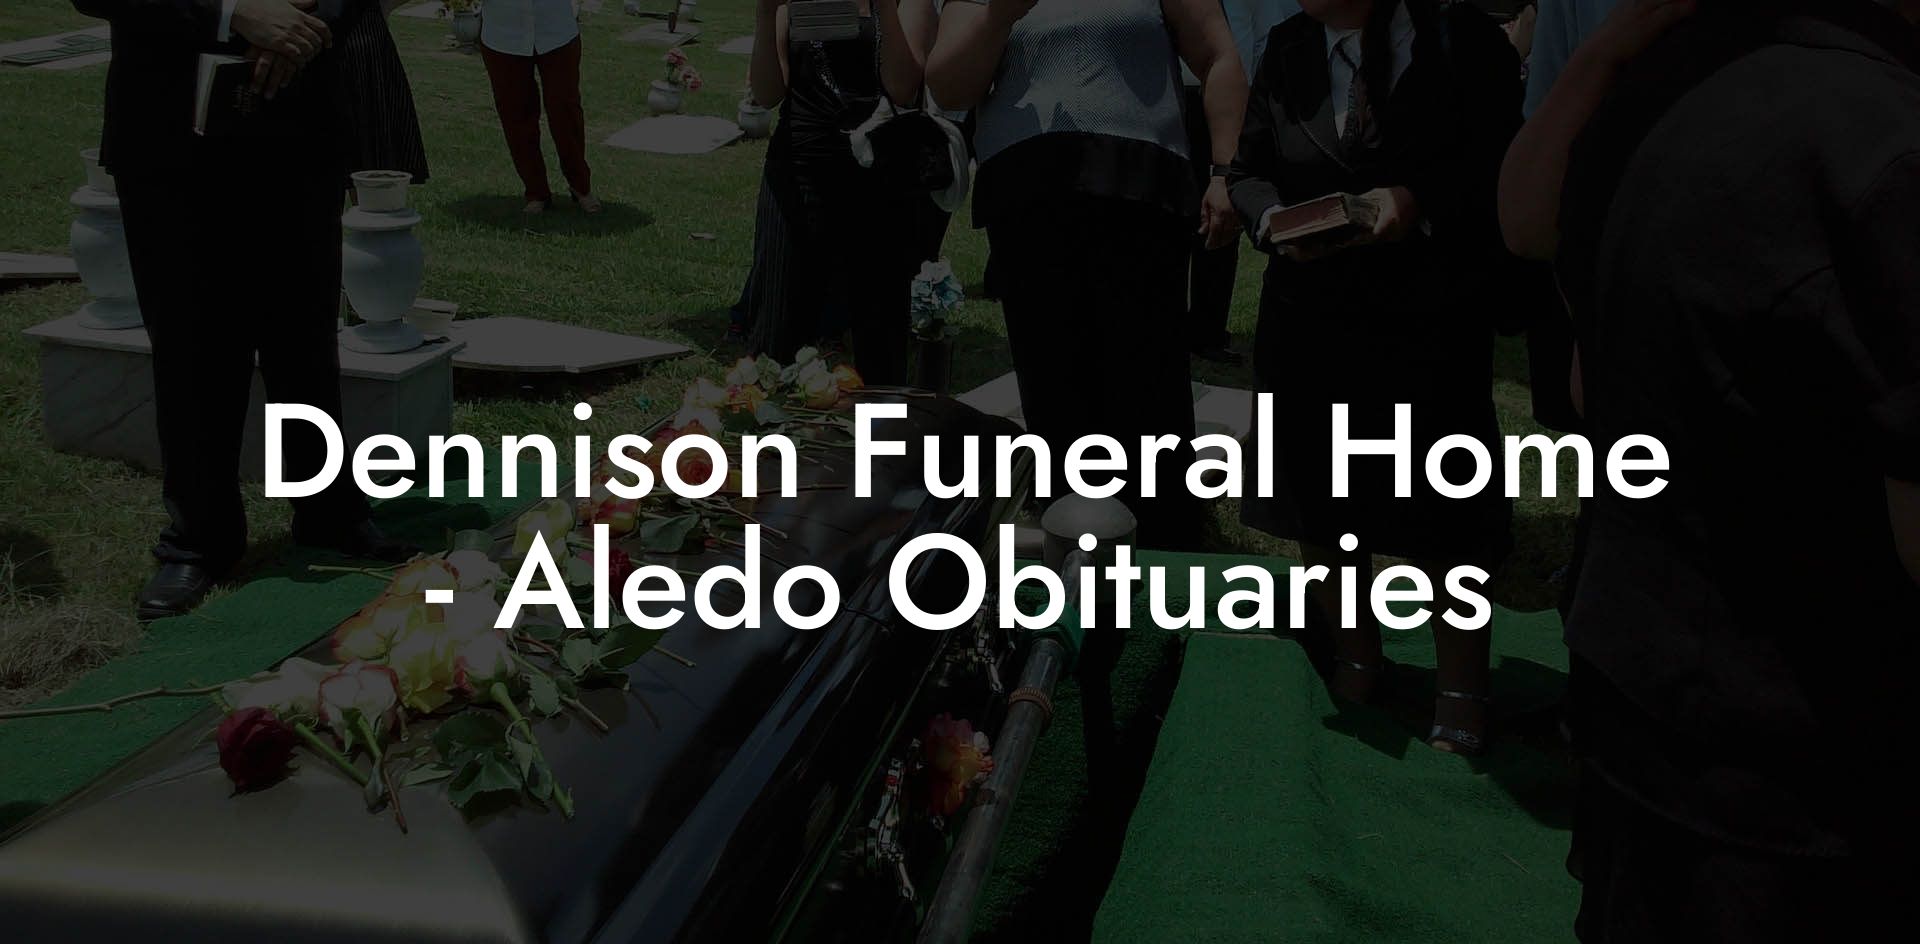 Dennison Funeral Home - Aledo Obituaries